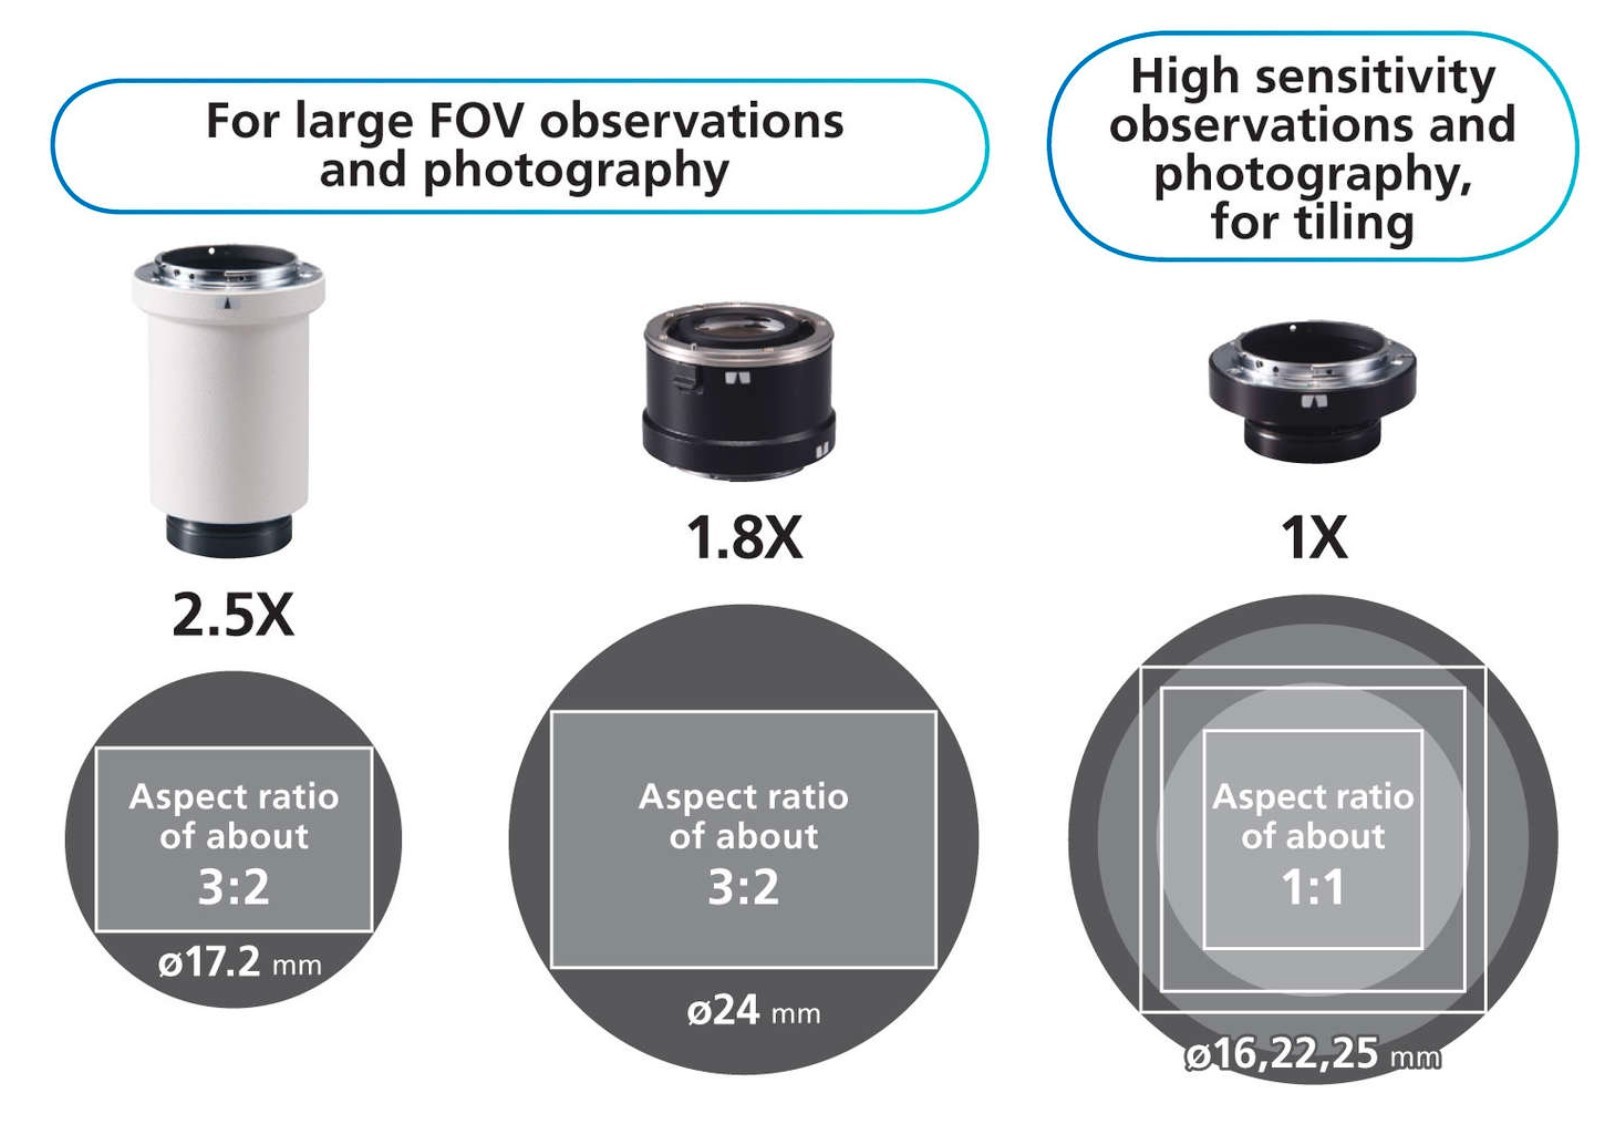 Nikon Digital Sight 50M 高感度單色顯微相機